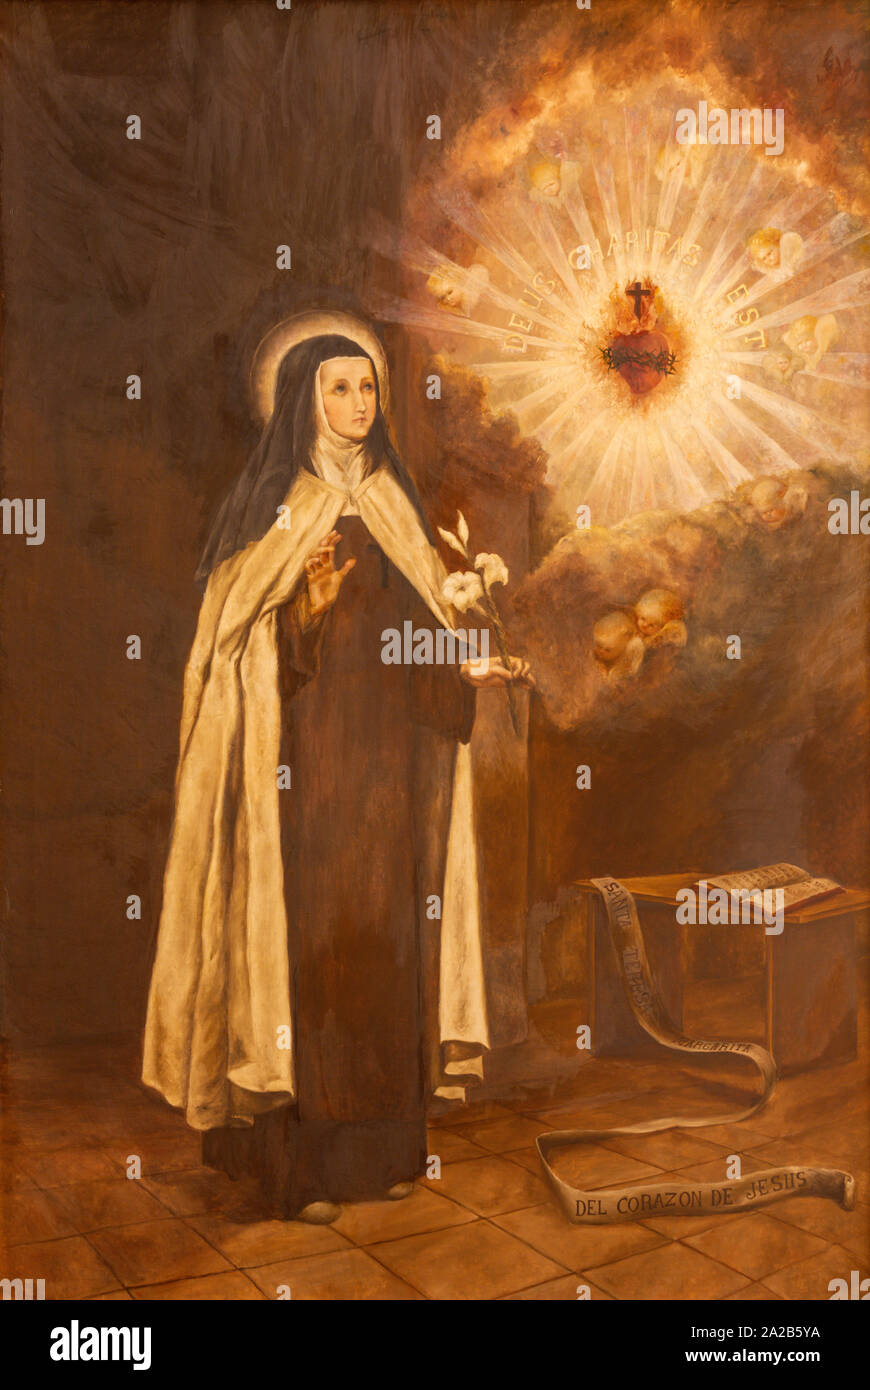 PALMA DE MALLORCA, SPAIN - JANUARY 29, 2019: The painting of St. Teresa of Avila in the church Iglesia de Santa Maria Magdalena Stock Photo